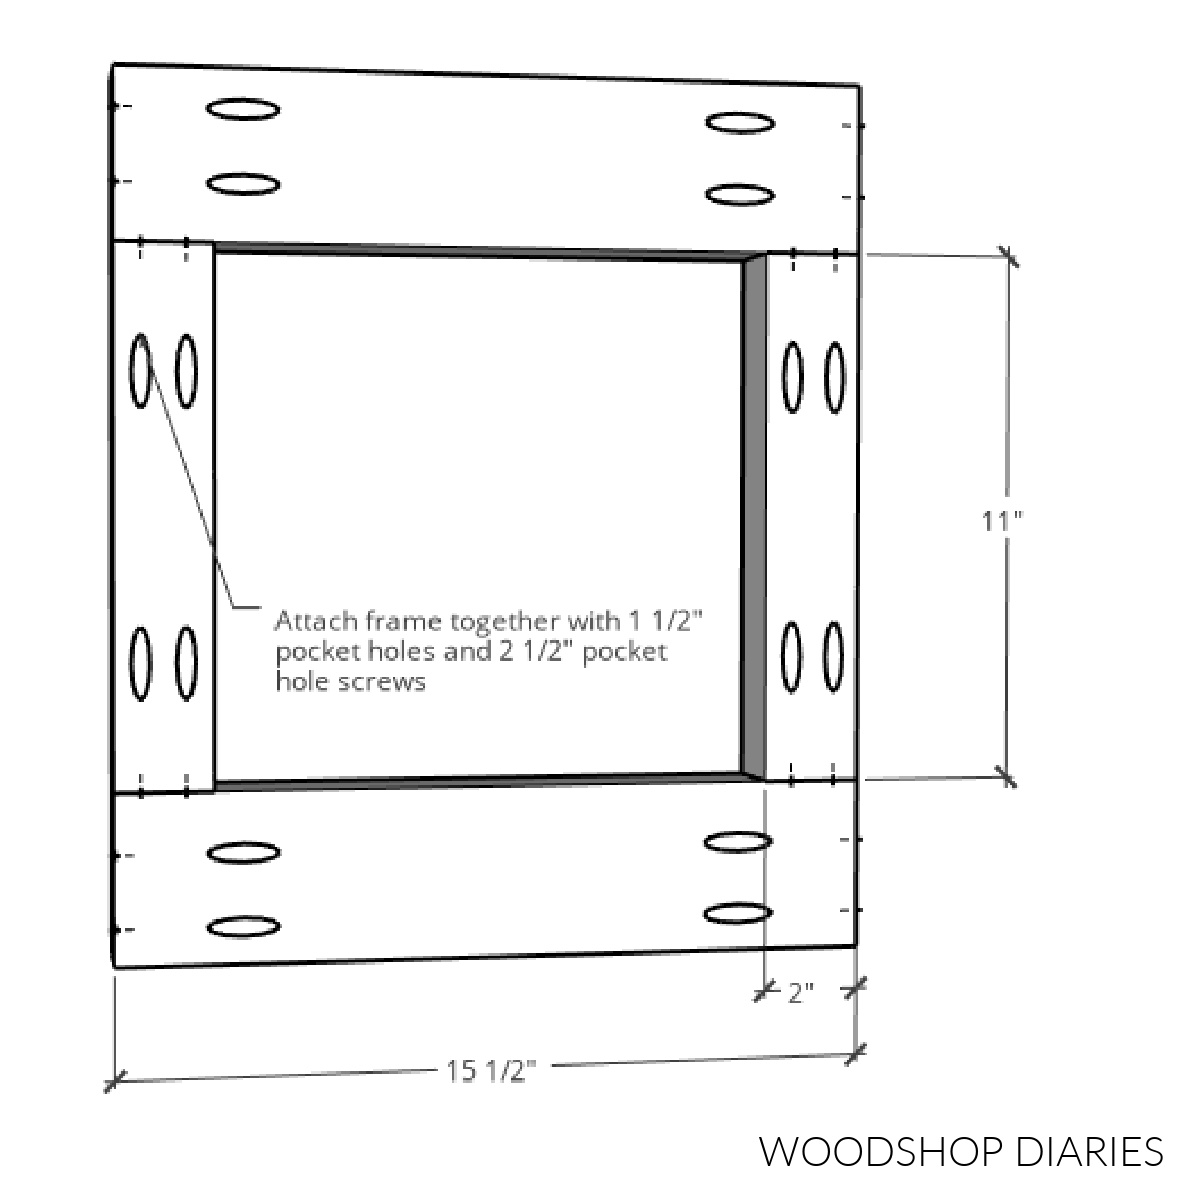 Assembly diagram of side frame of tree skirt box